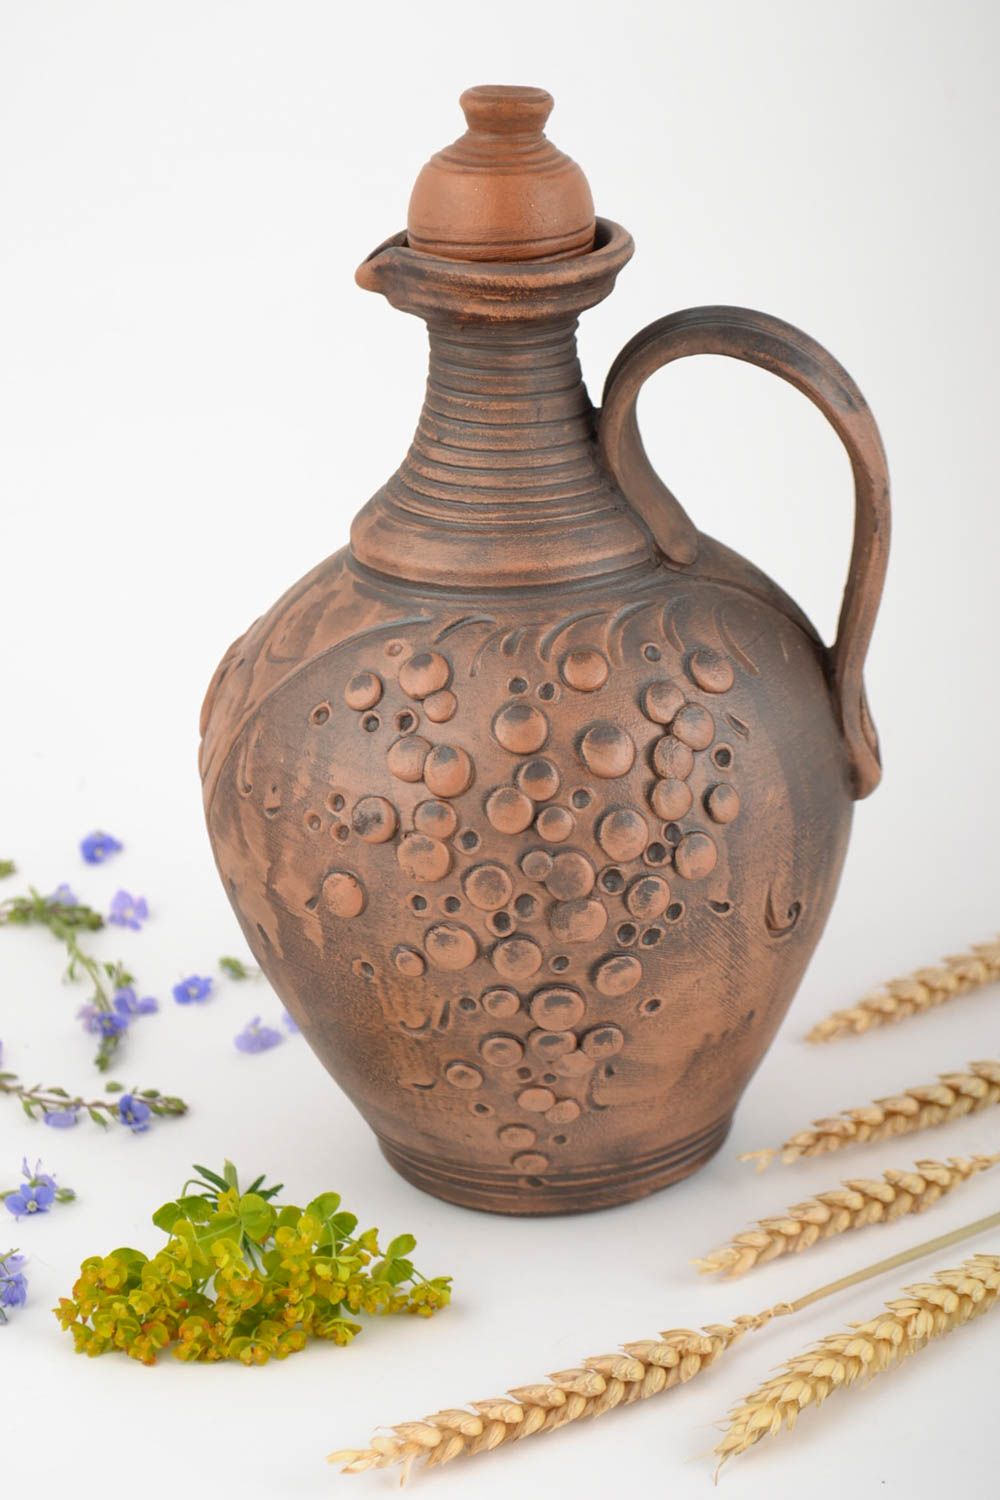 60 oz ceramic handmade wine jug carafe with handle and lid 1,95 lb photo 1